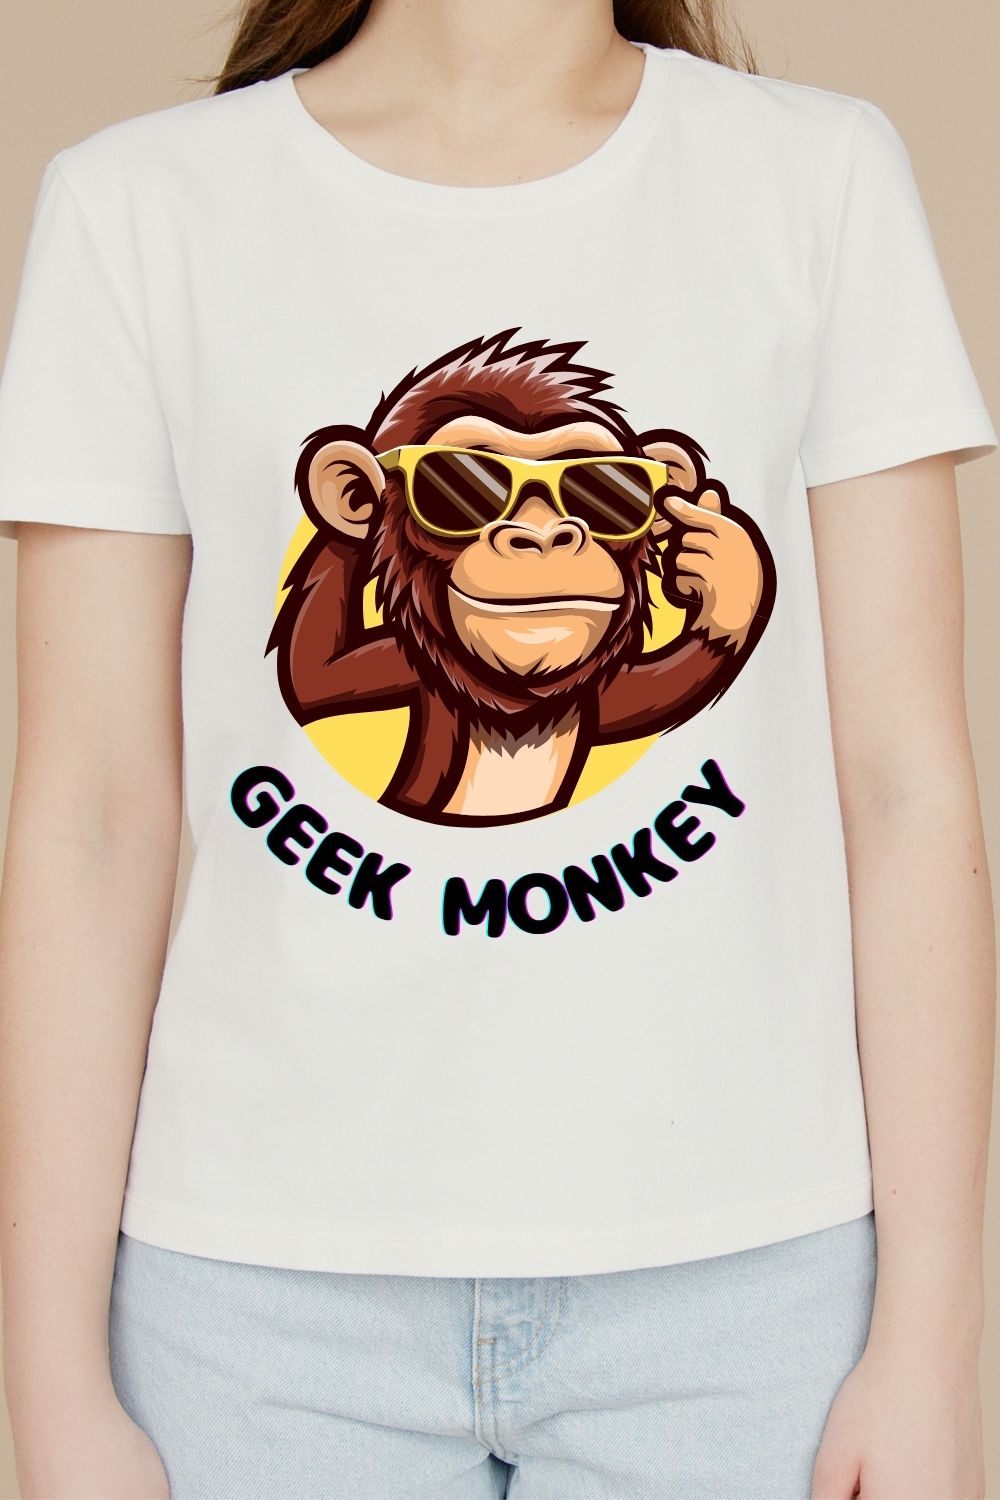 Cute Geek Monkey Design pinterest preview image.